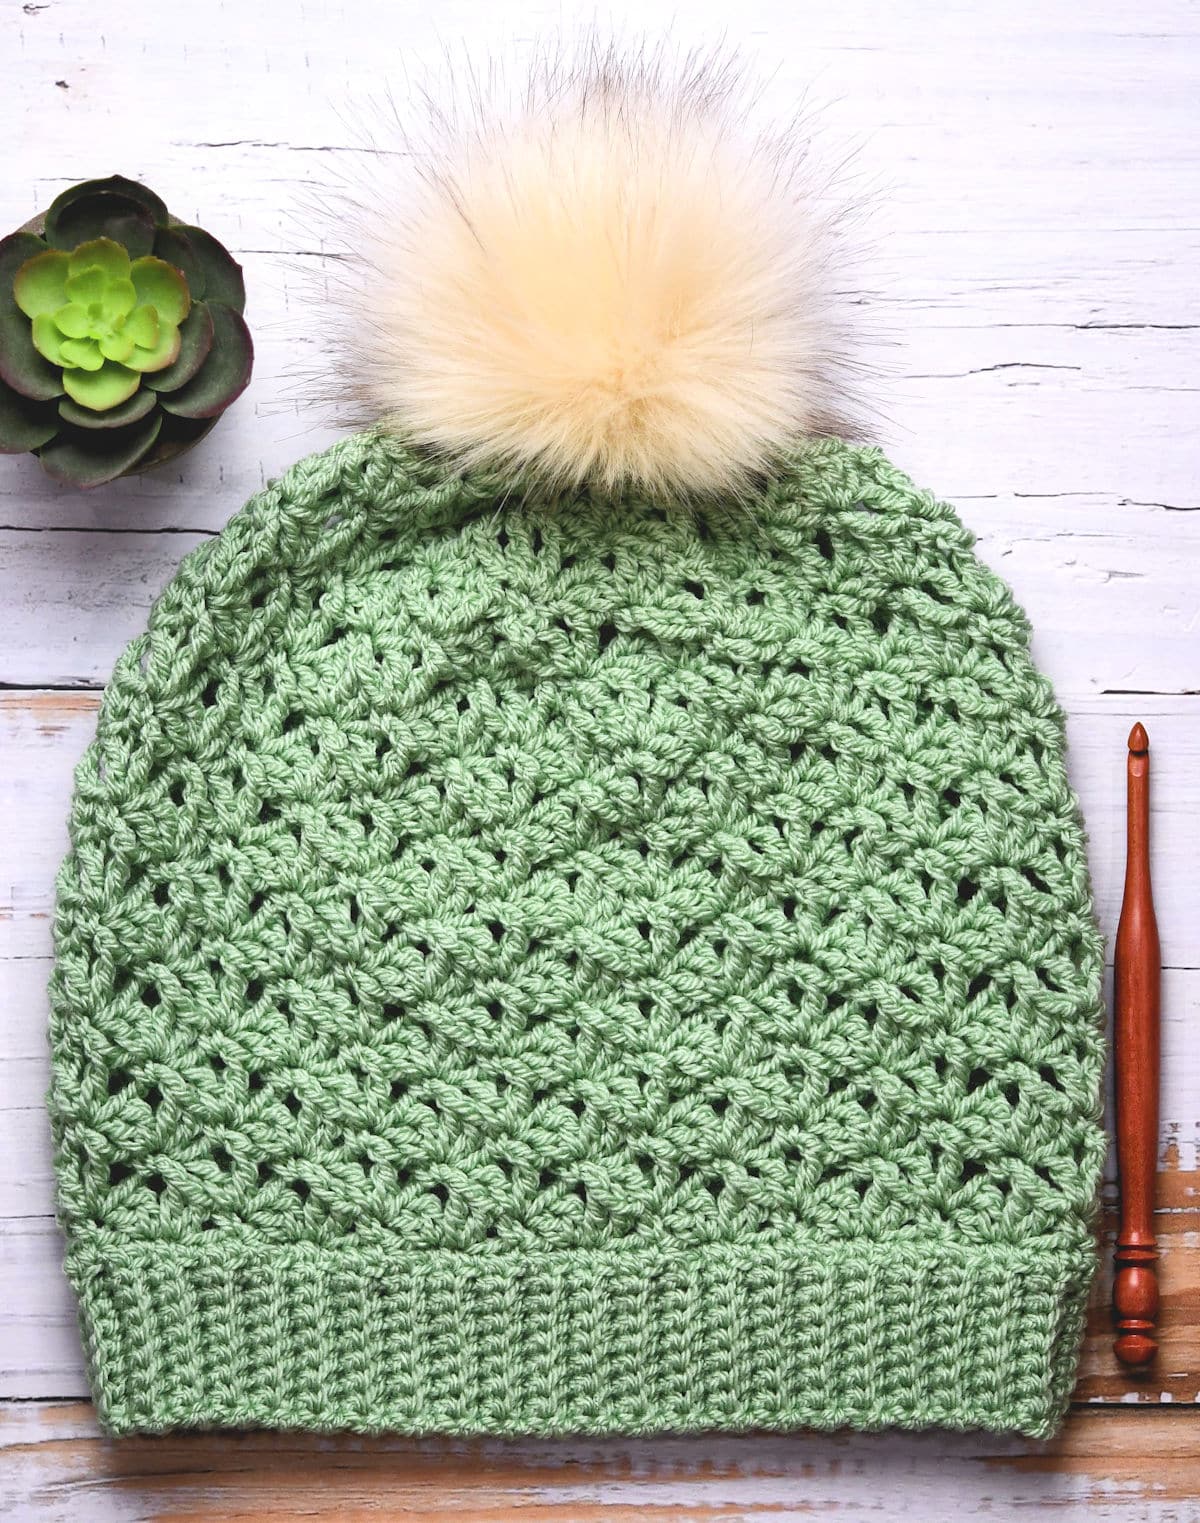 Crochet Shell Stitch Hat Free Pattern by Kim Guzman